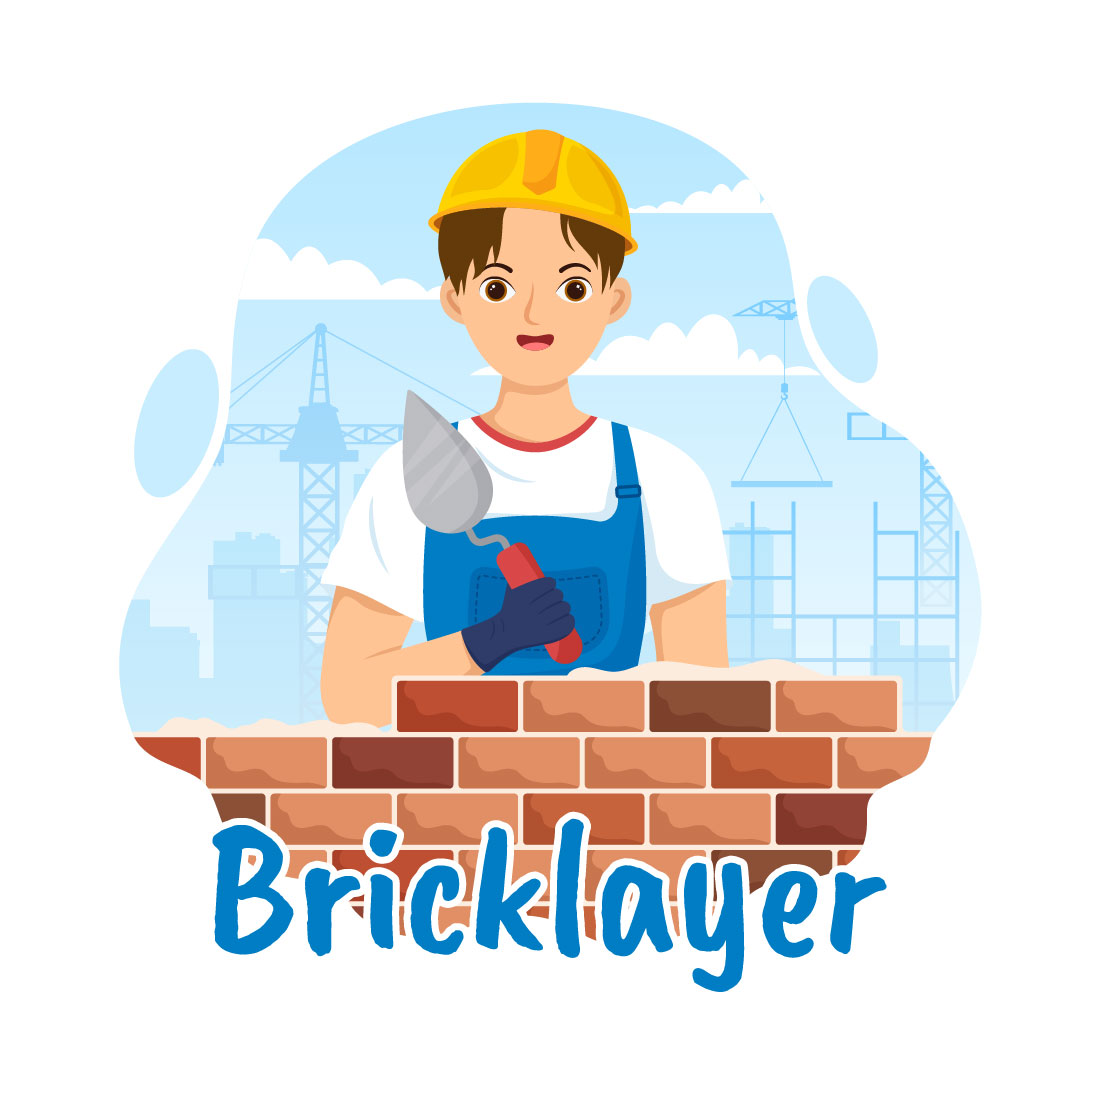 12 Bricklayer Worker Illustration preview image.